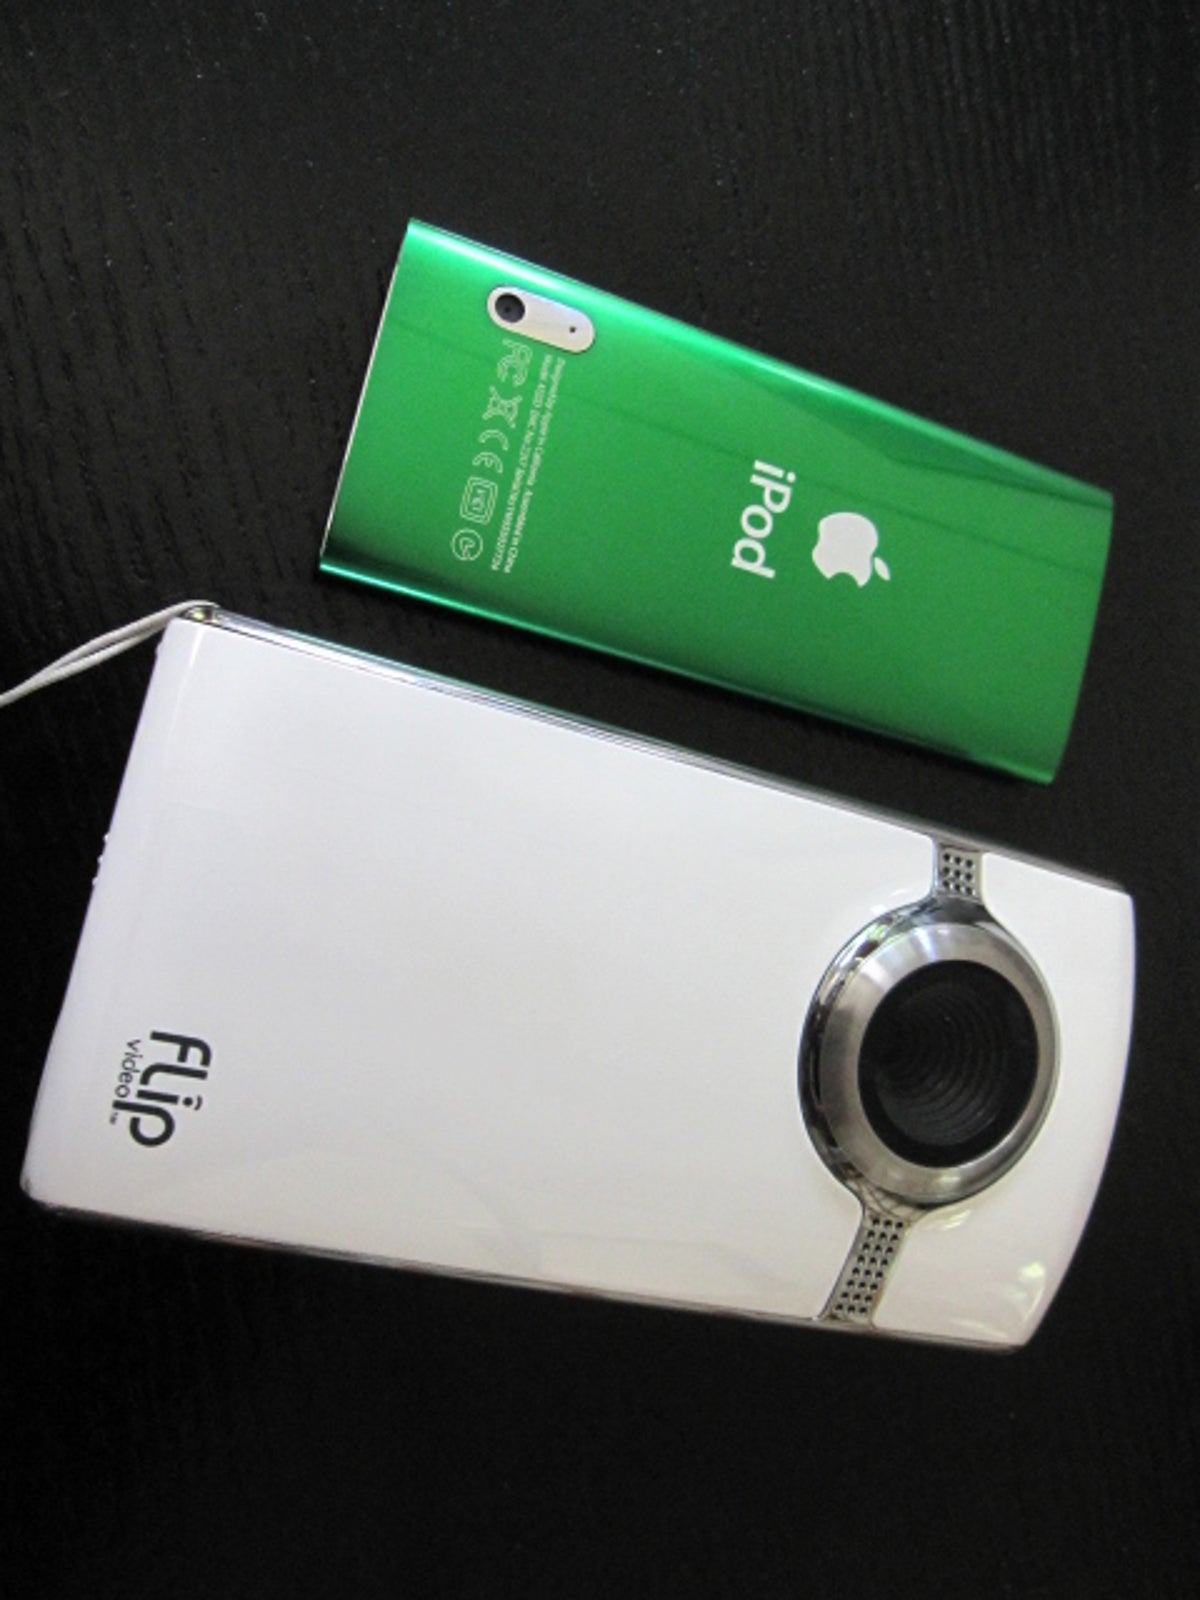 Photo of iPod Nano next to Flip Ultra HD camcorder.